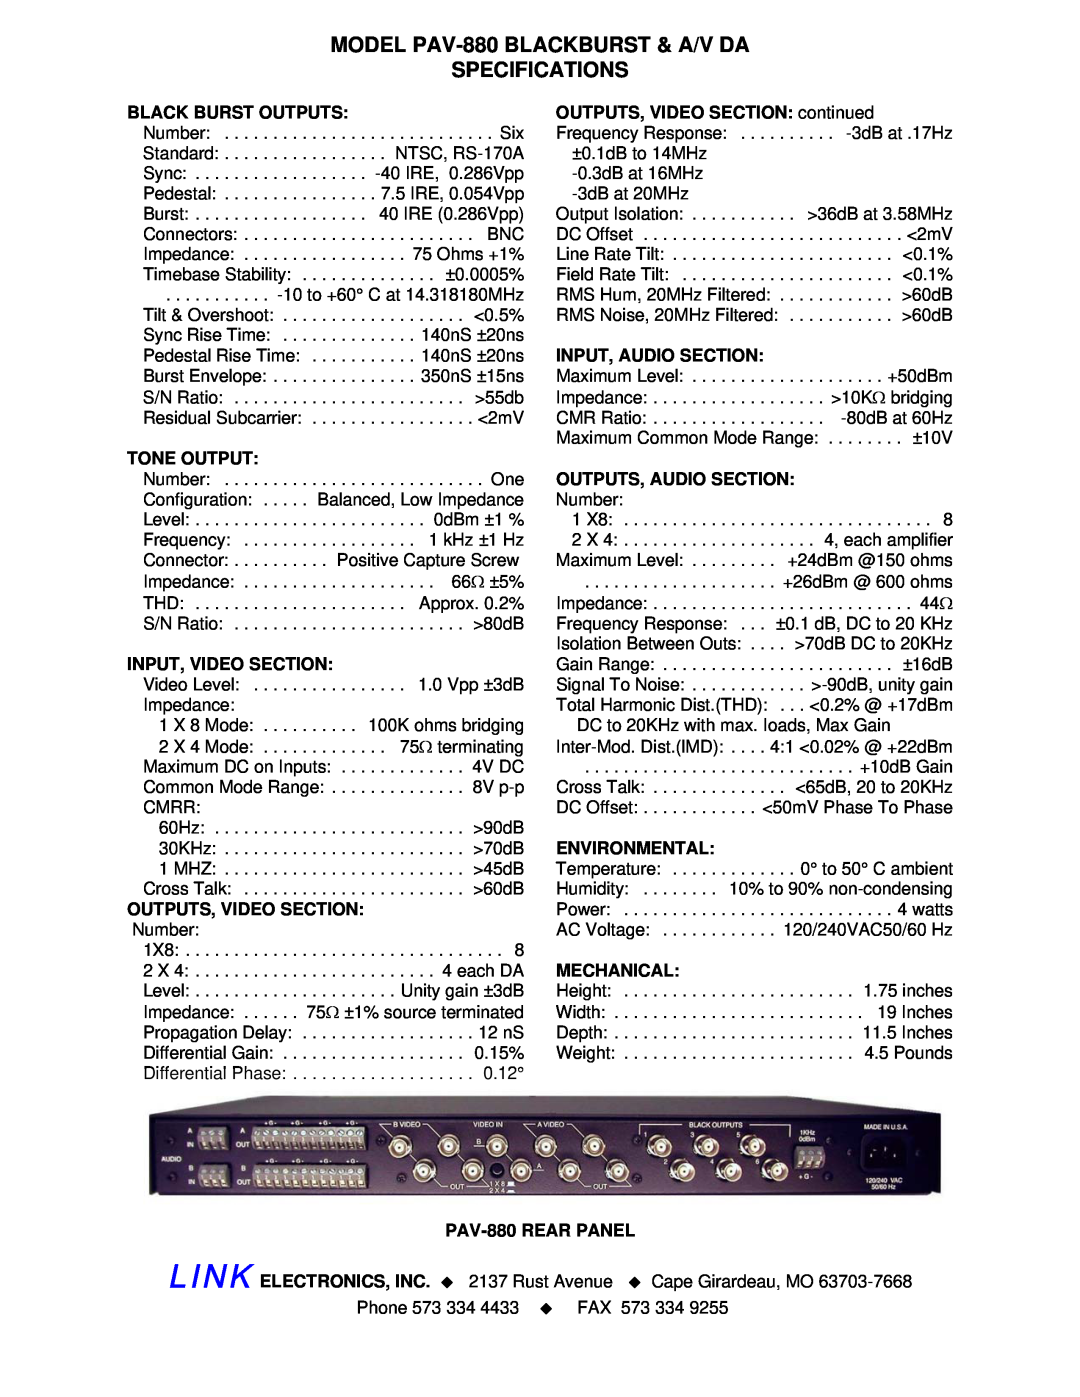 Link electronic manual MODEL PAV-880BLACKBURST & A/V DA SPECIFICATIONS 